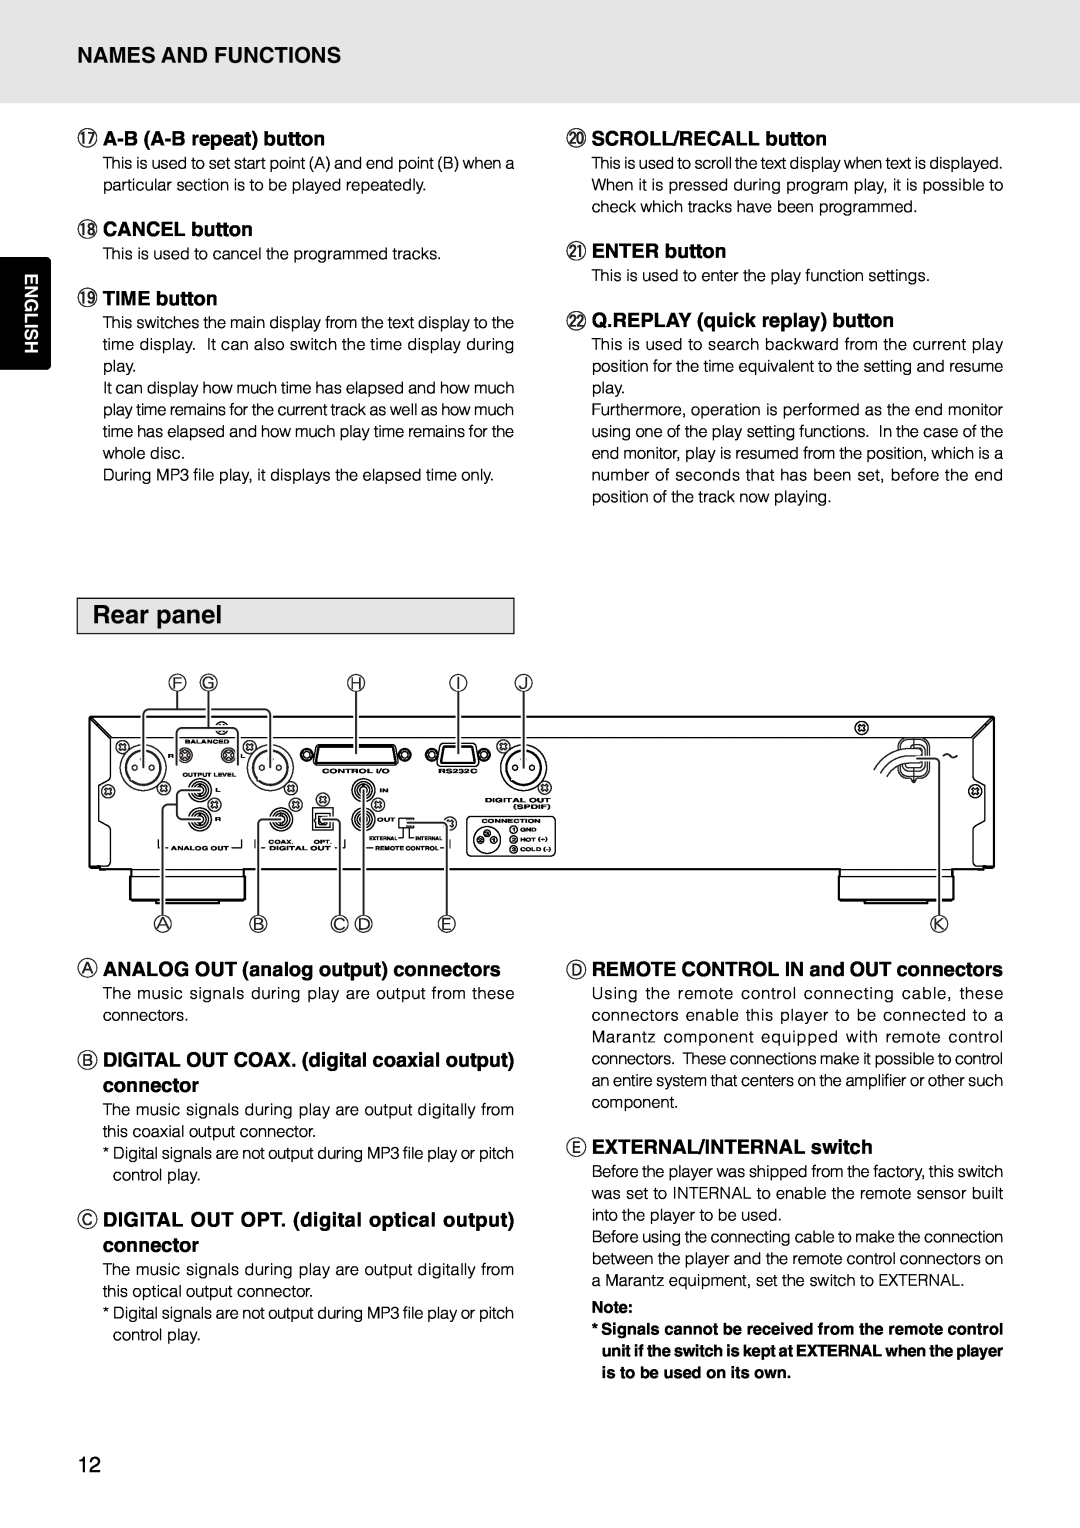 Marantz PMD325 manual Rear panel, Names And Functions 